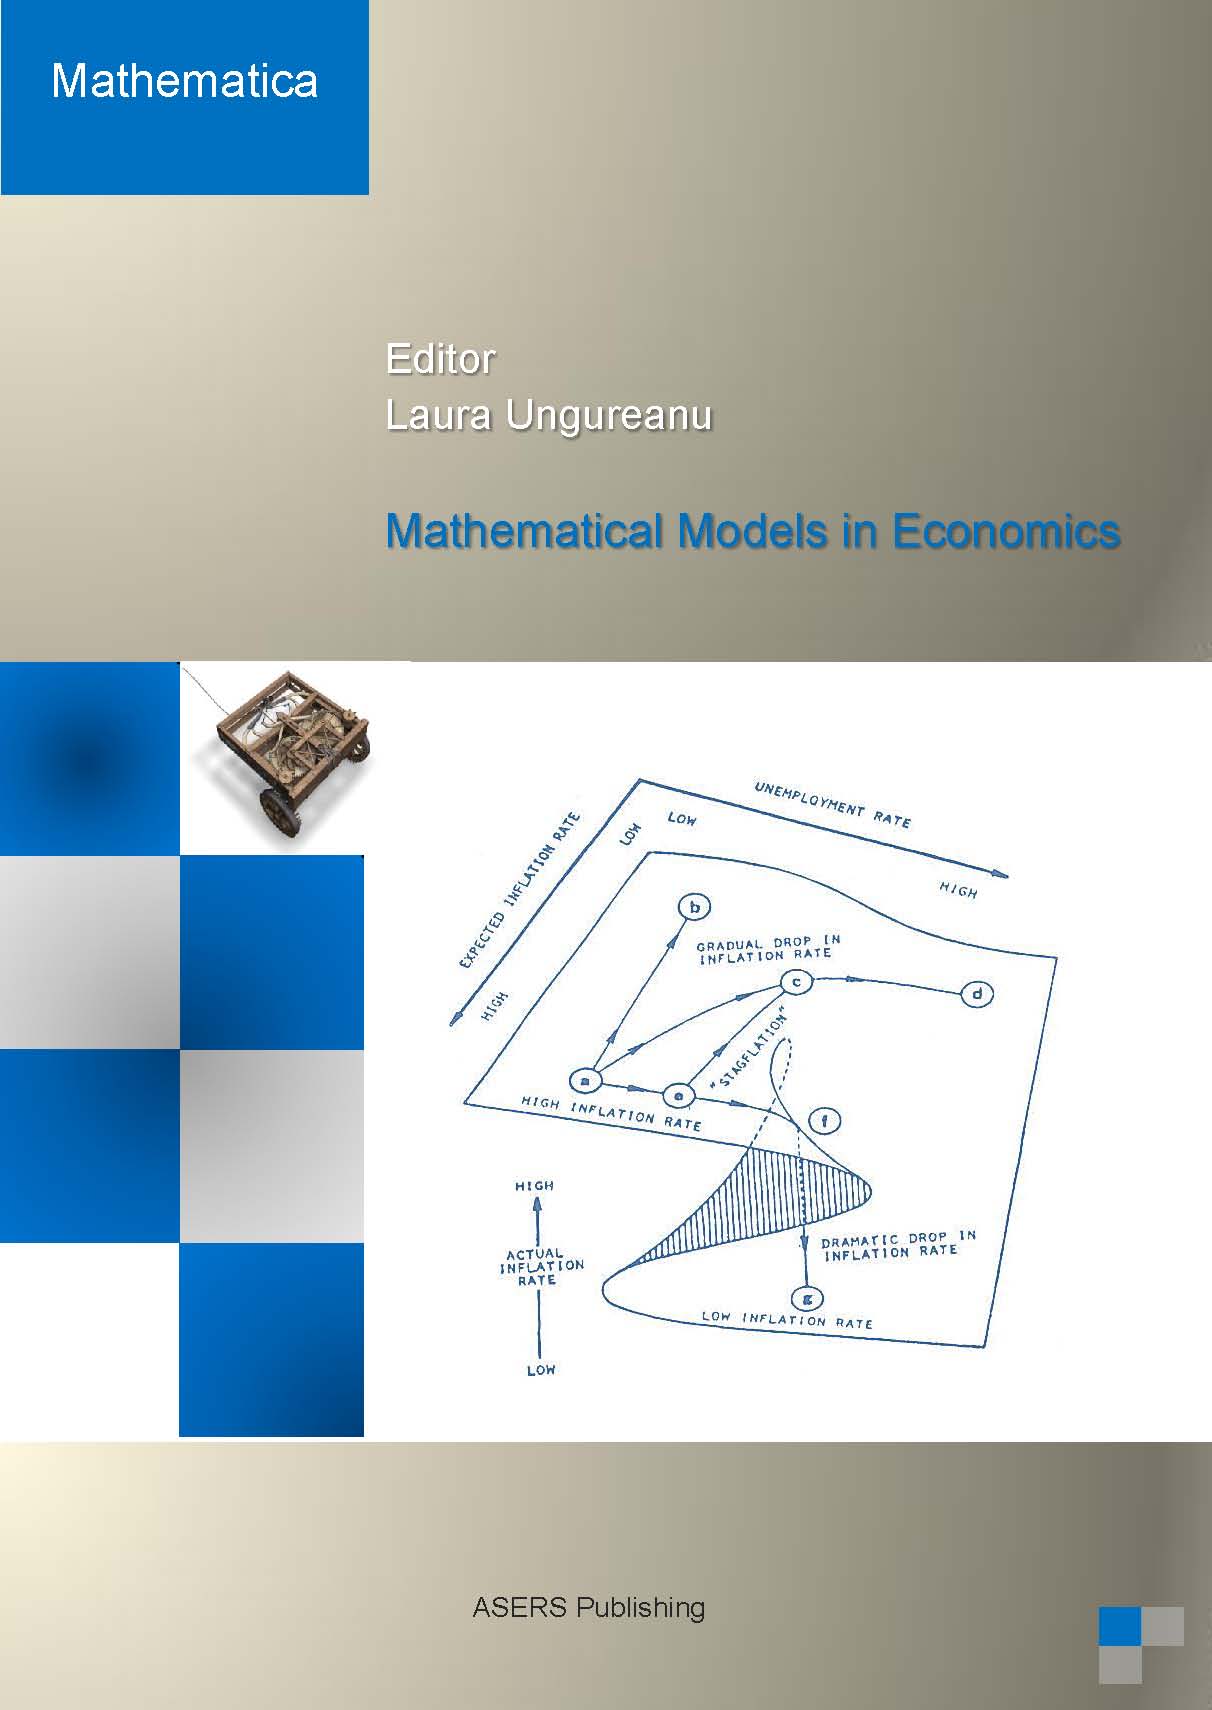 Mathematical Models in Economics